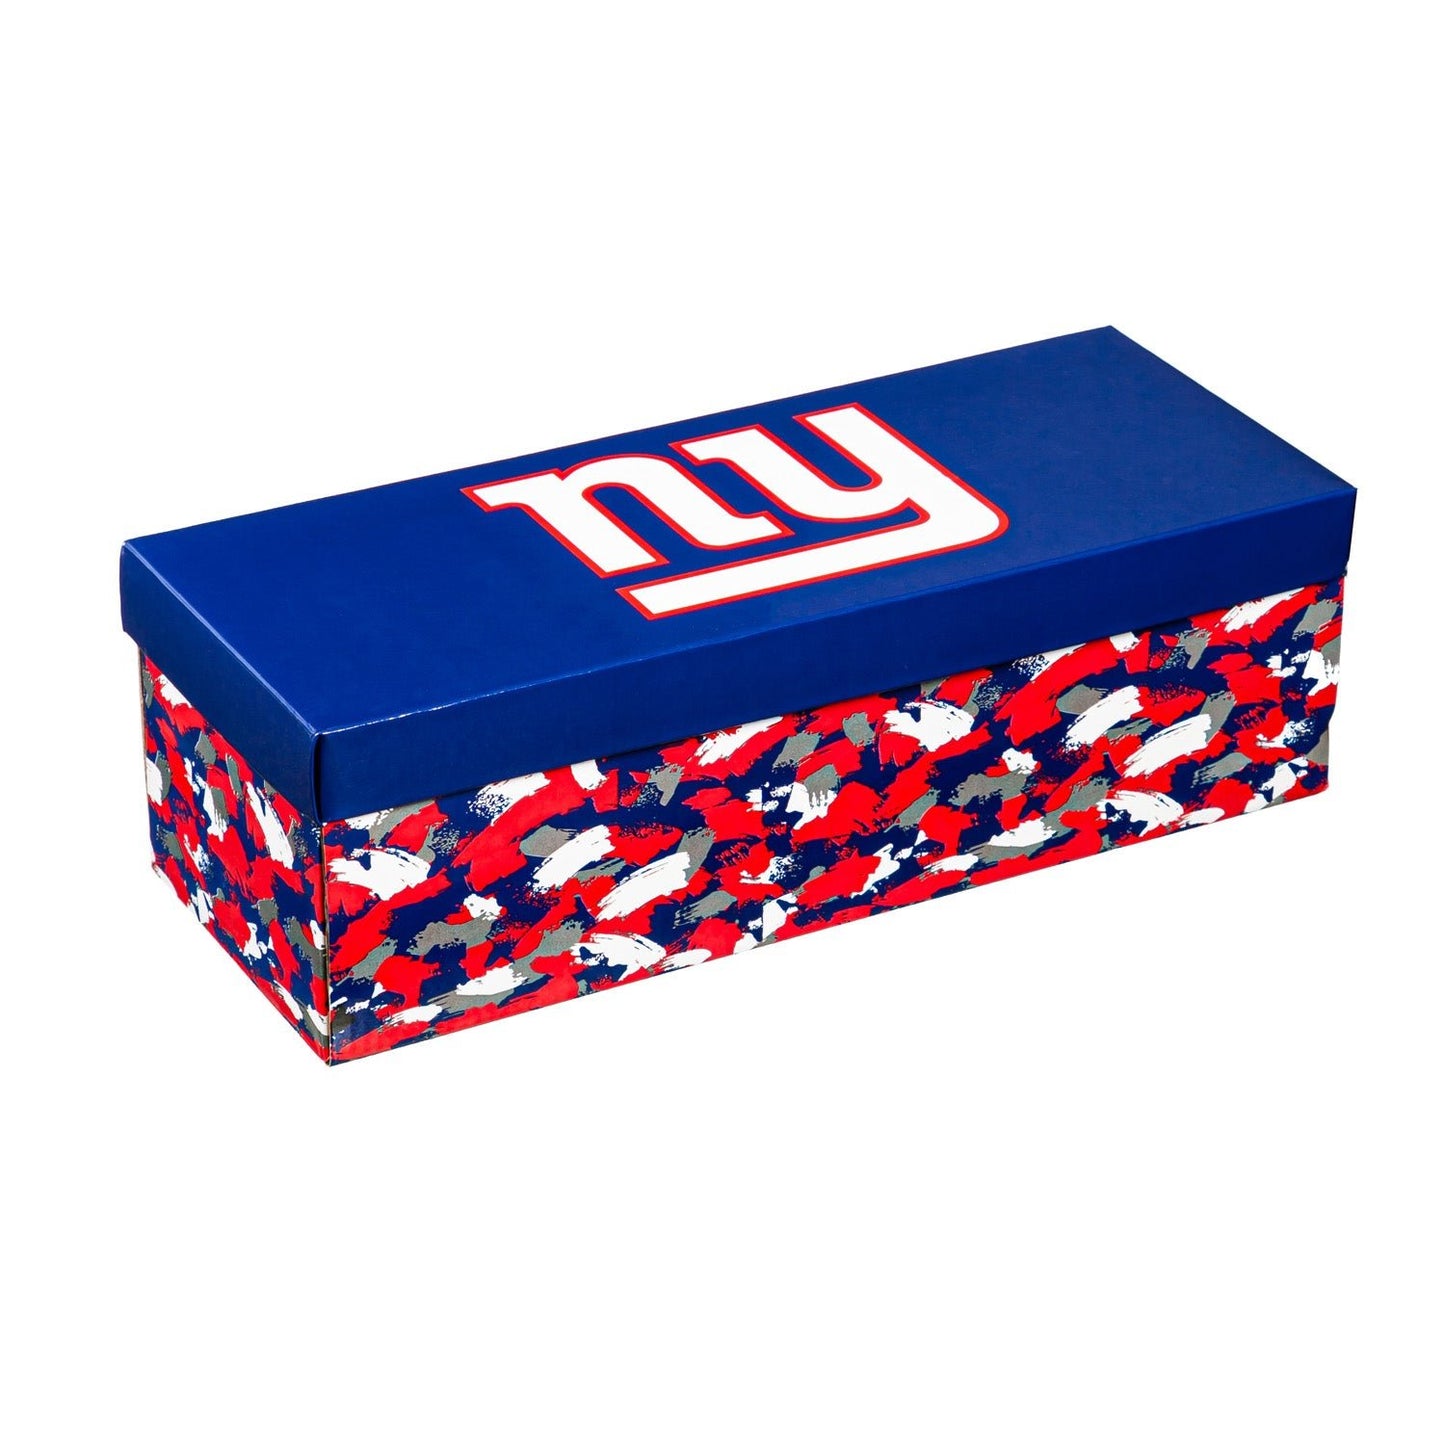 New York Giants, Ceramic Cup O'Java Gift Set, 17oz